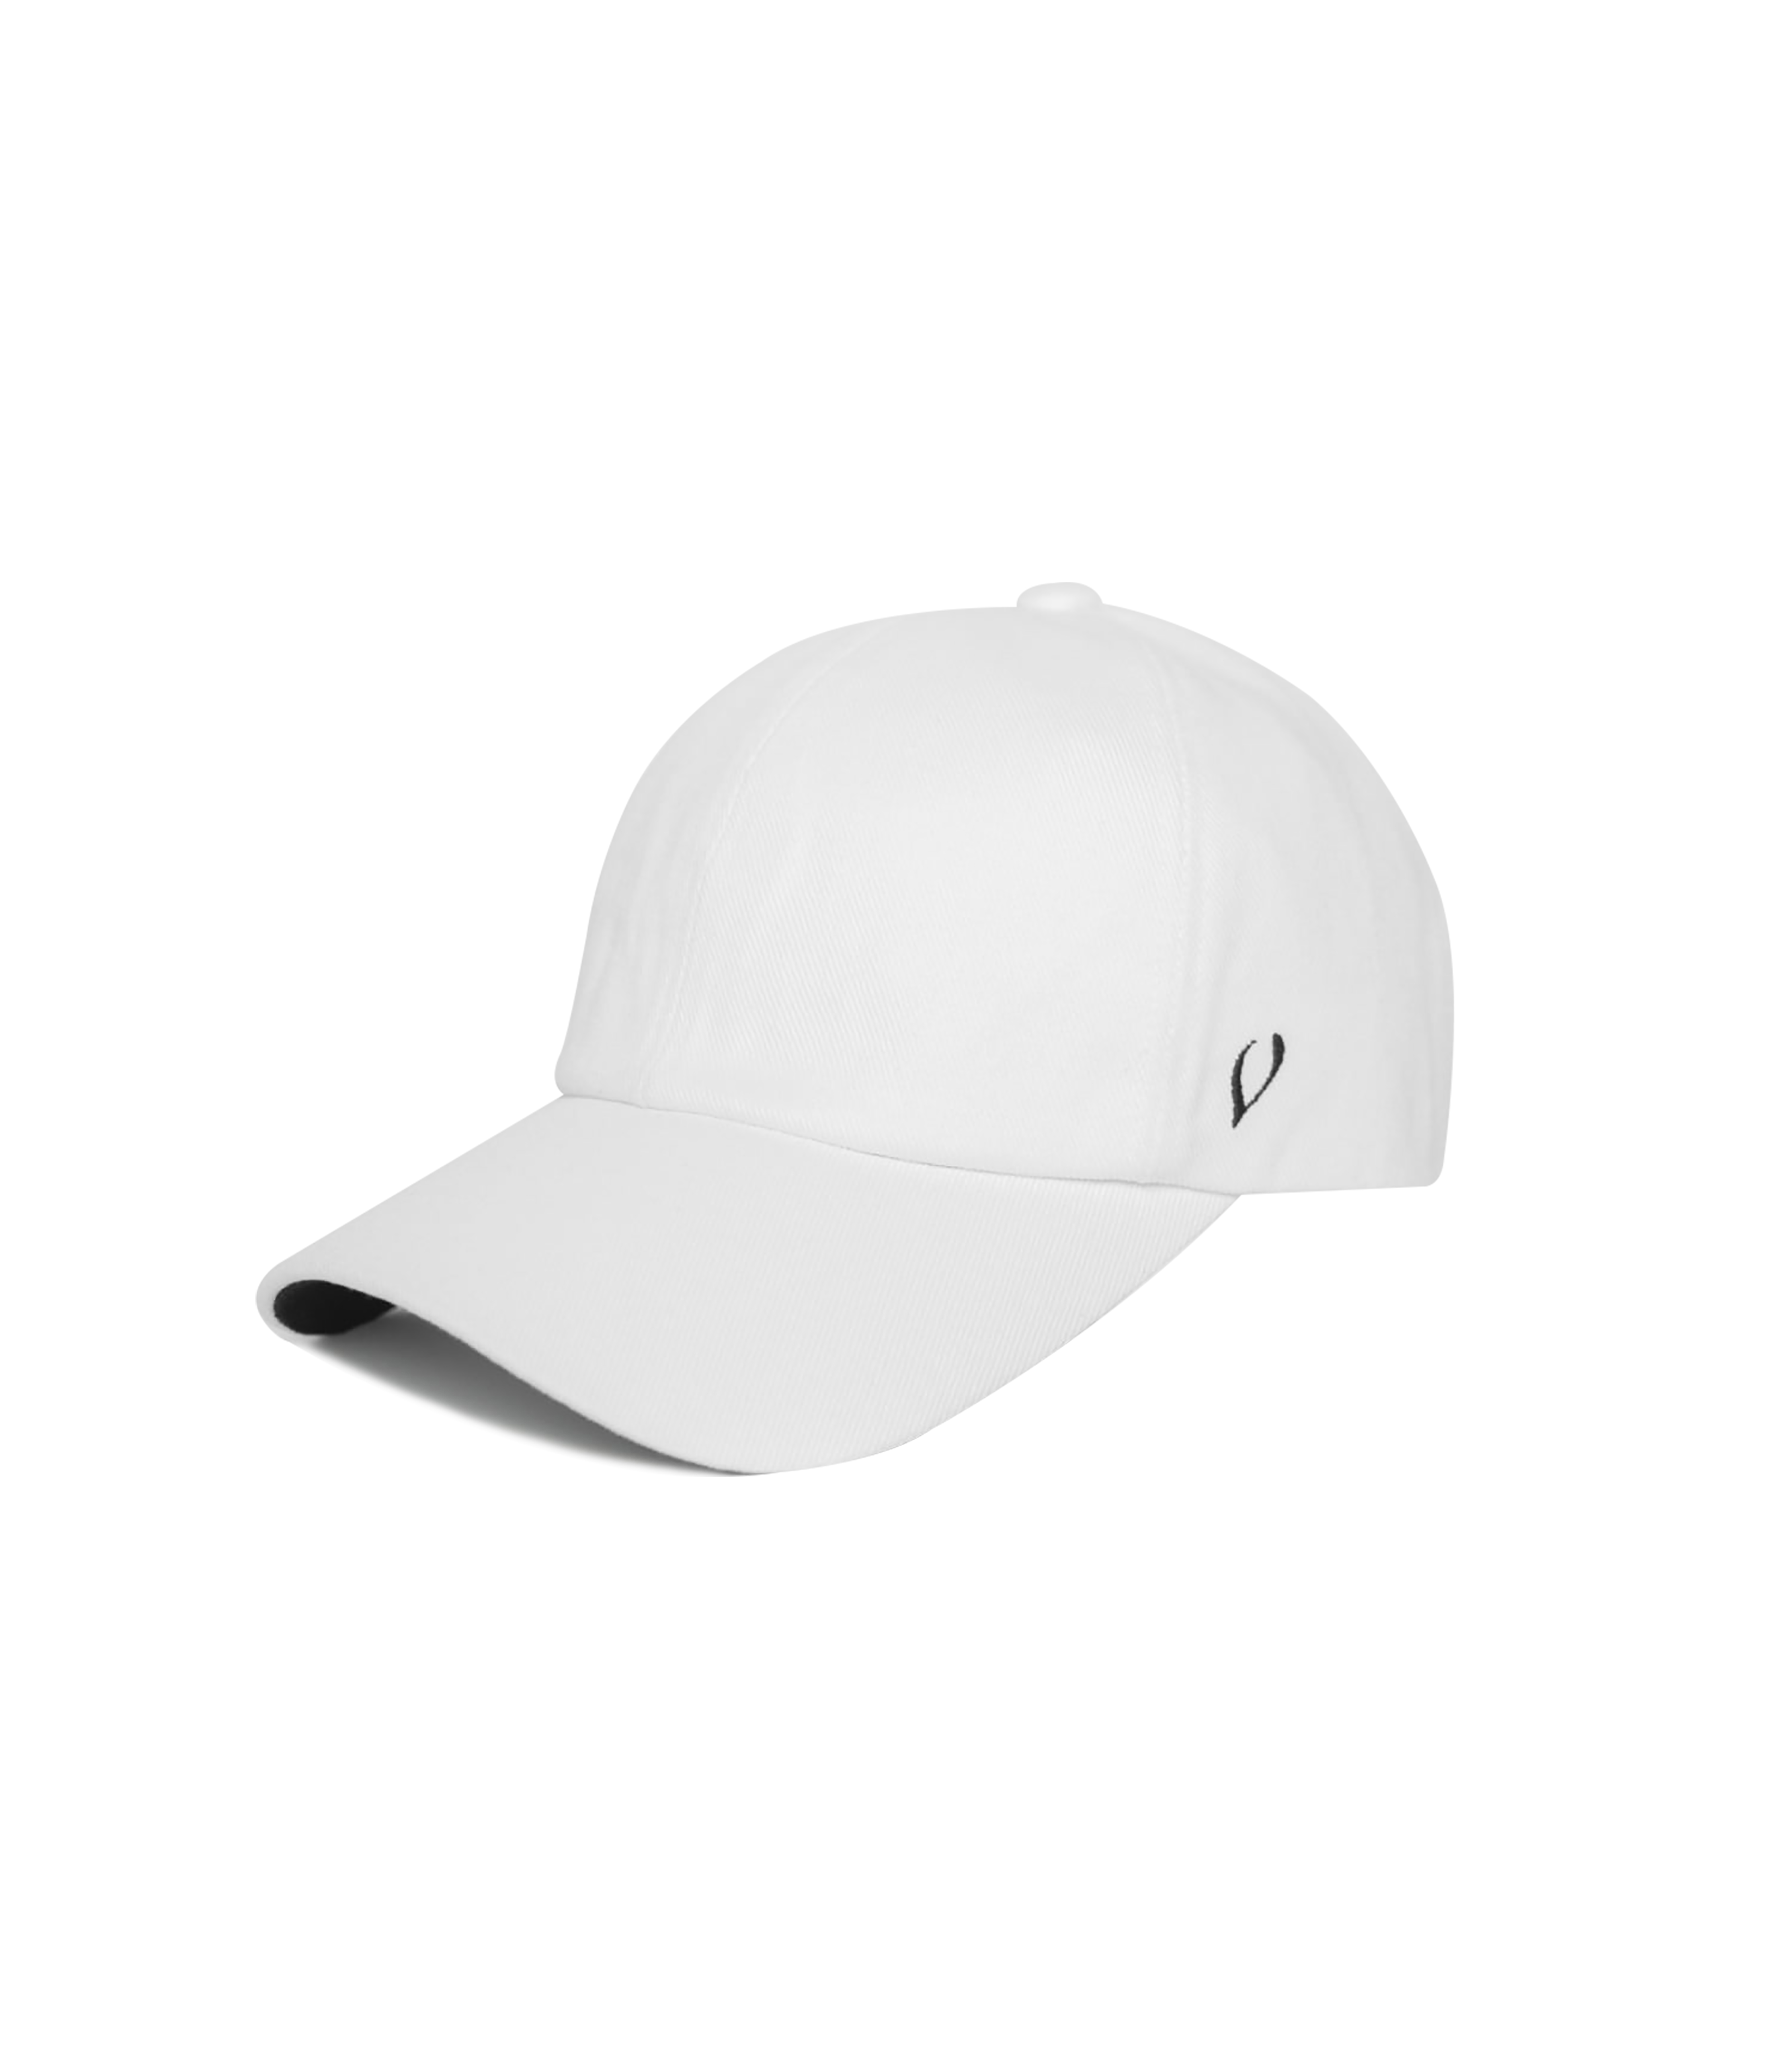 VIBRATEKIDS - DOUBLE SIDE BALL CAP (WHITE)